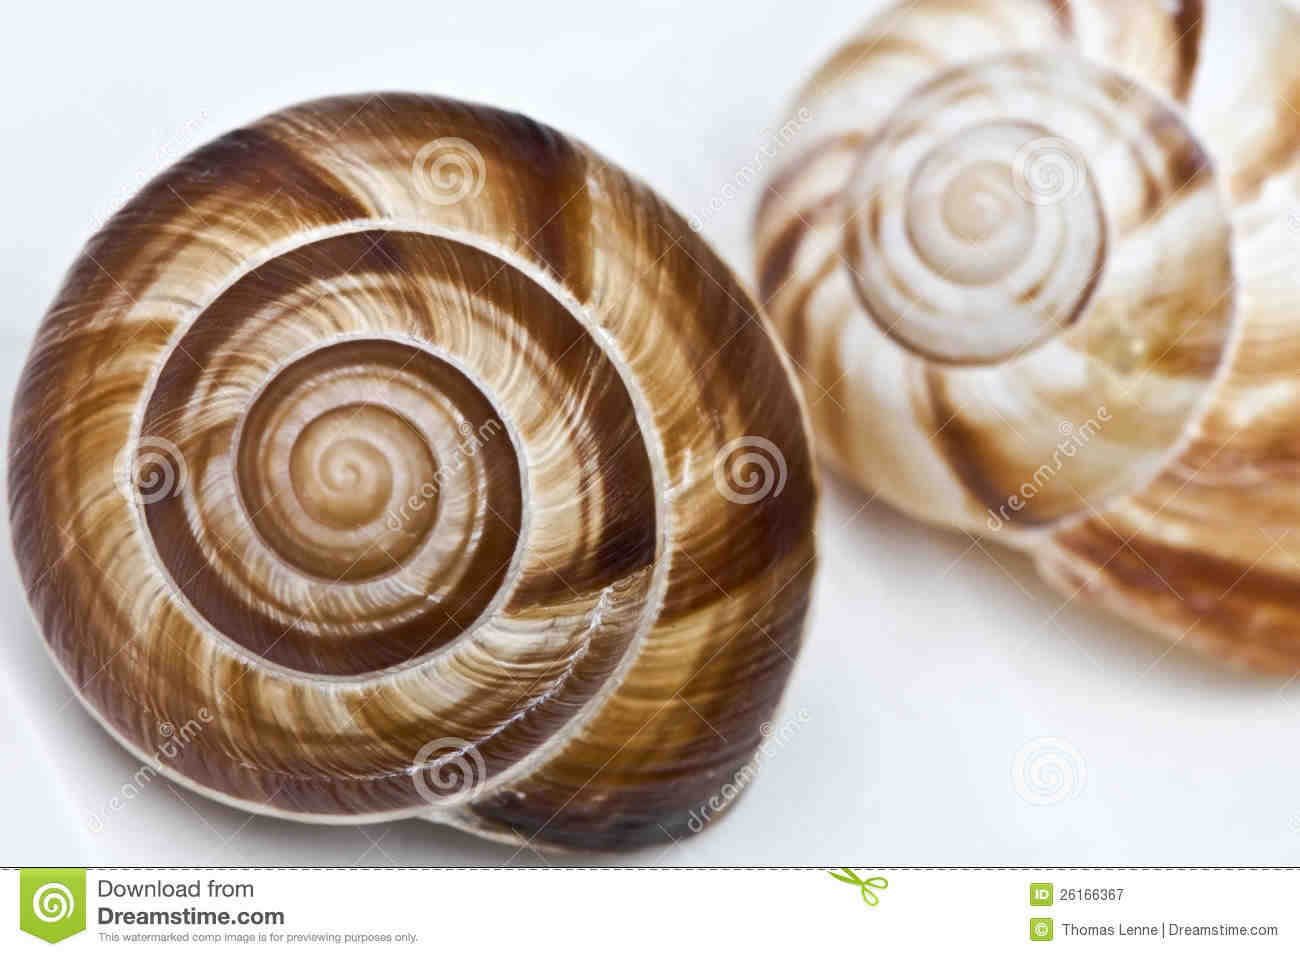 Is a snail shell a Fibonacci spiral?